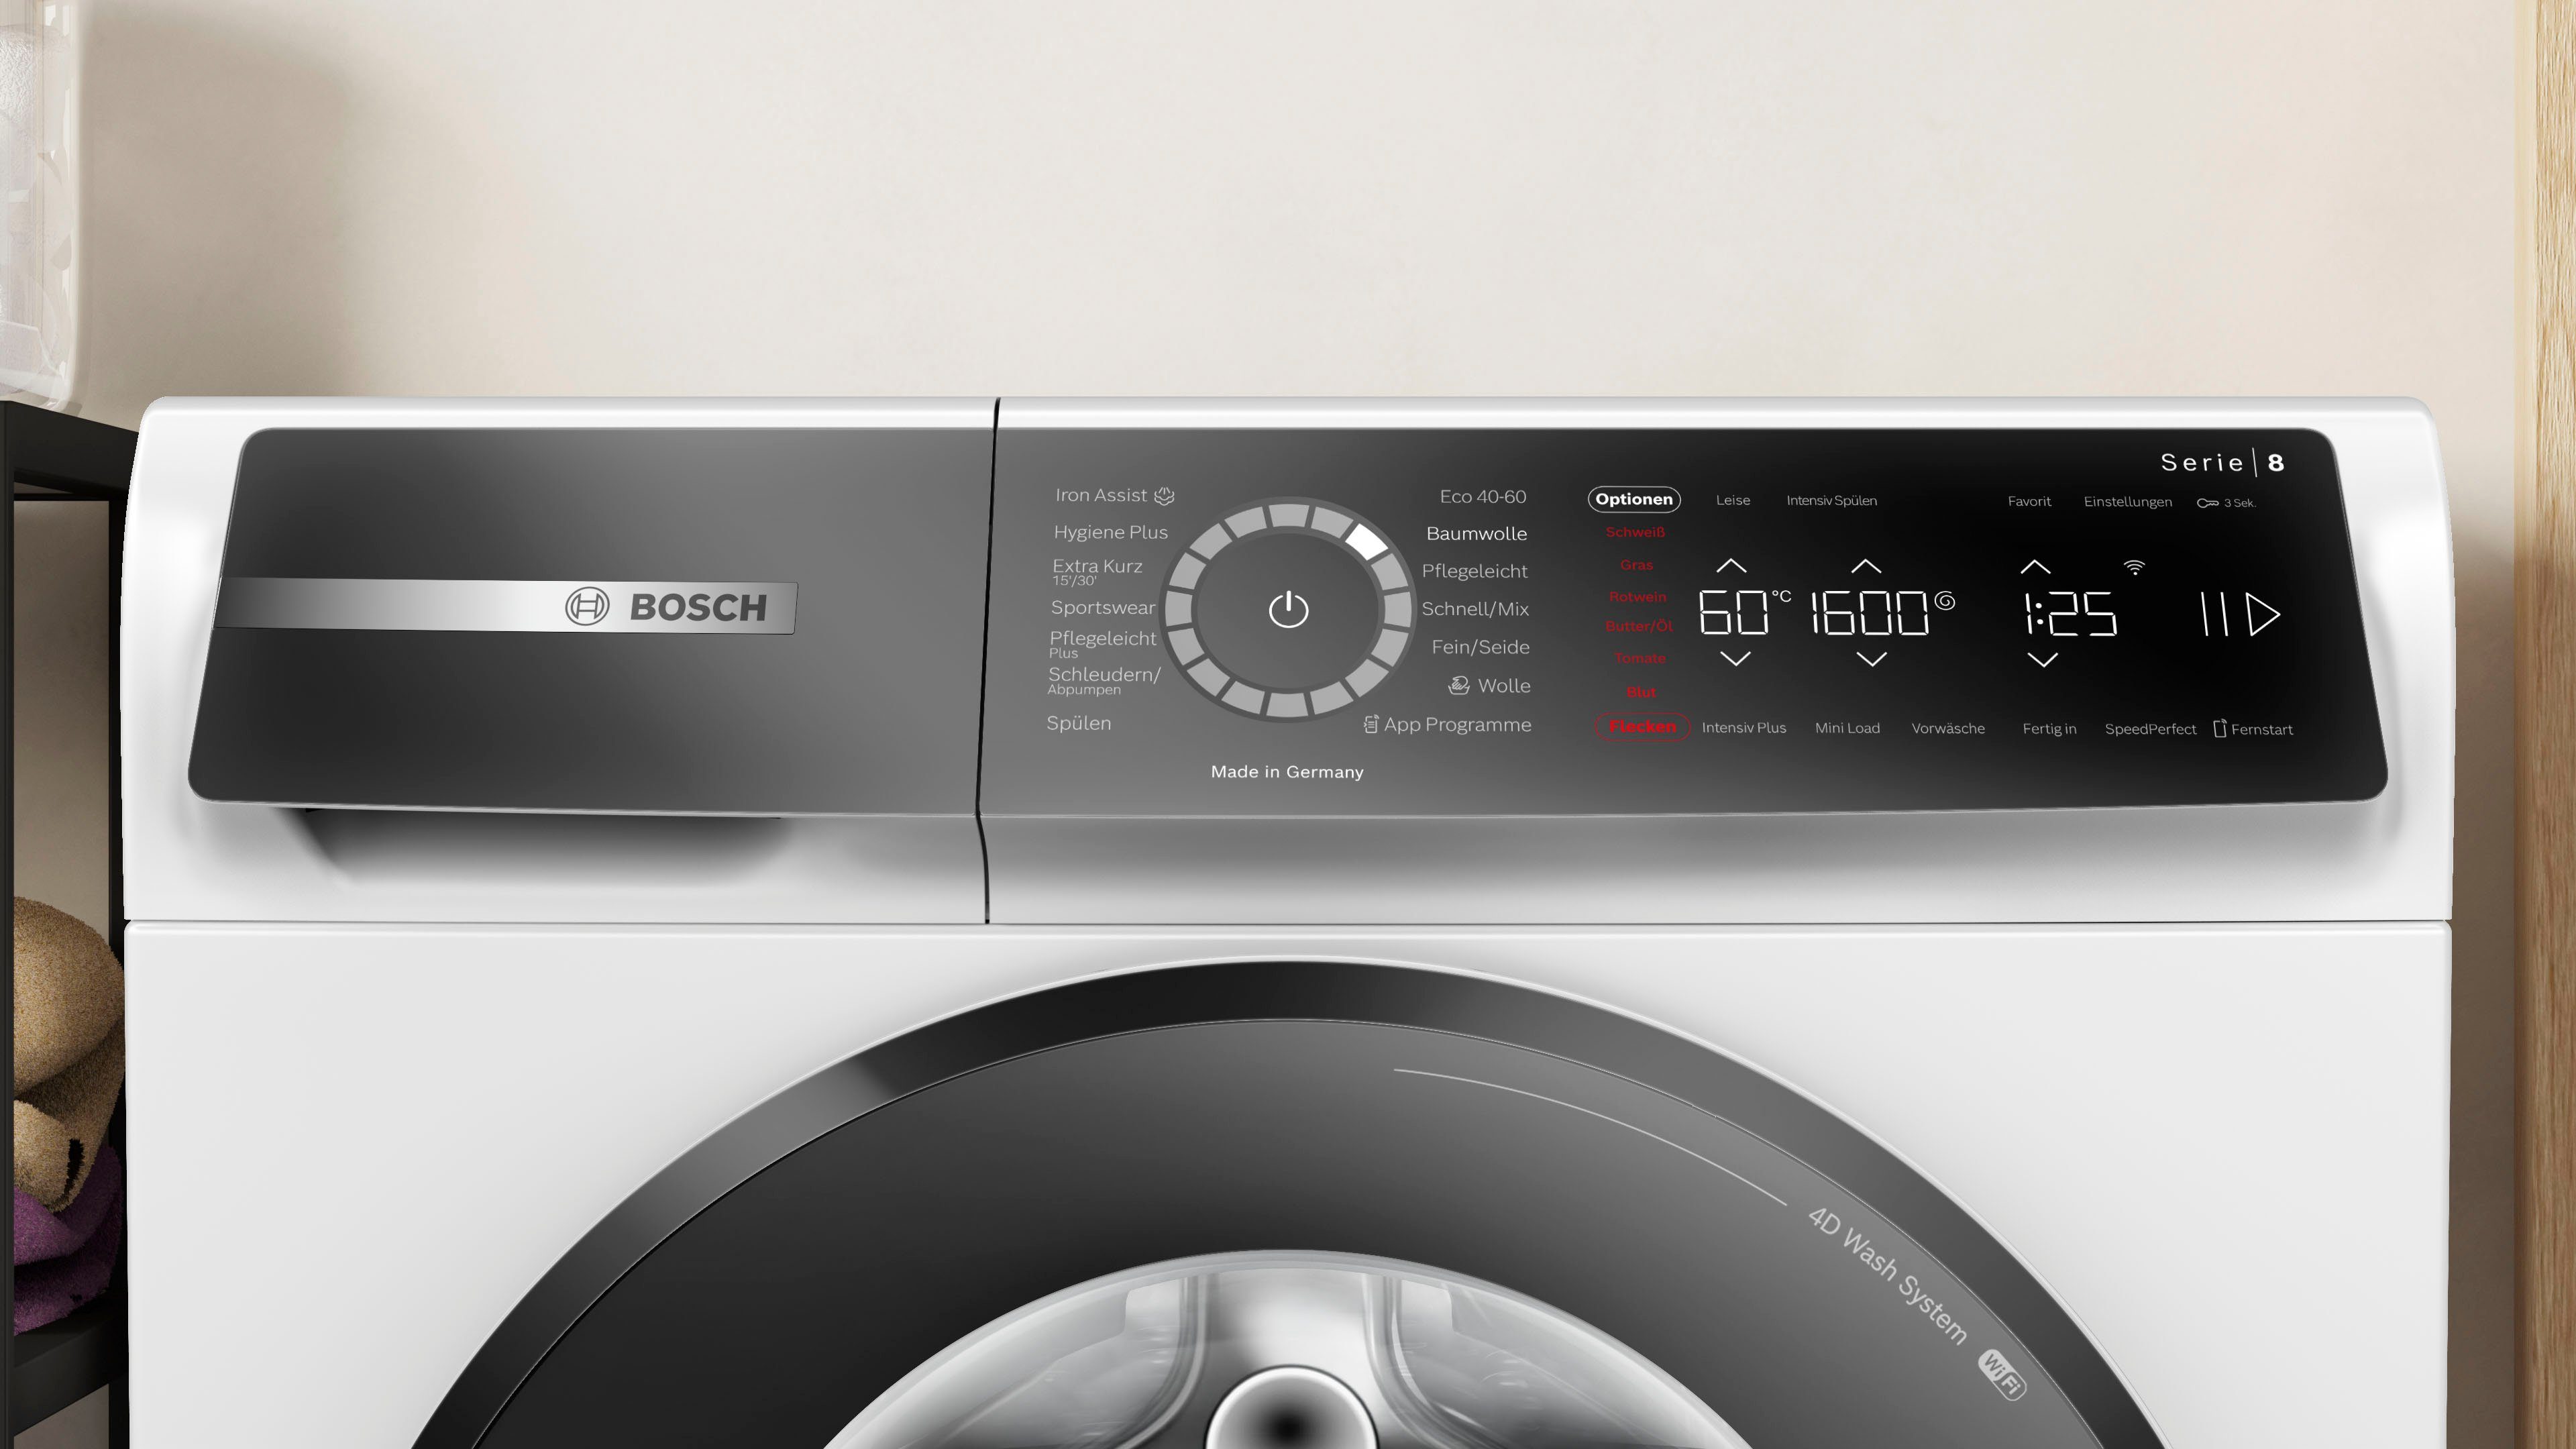 BOSCH Waschmaschine Serie 8 Falten % Assist Dampf 1600 WGB256040, reduziert U/min, kg, 50 Iron 10 der dank